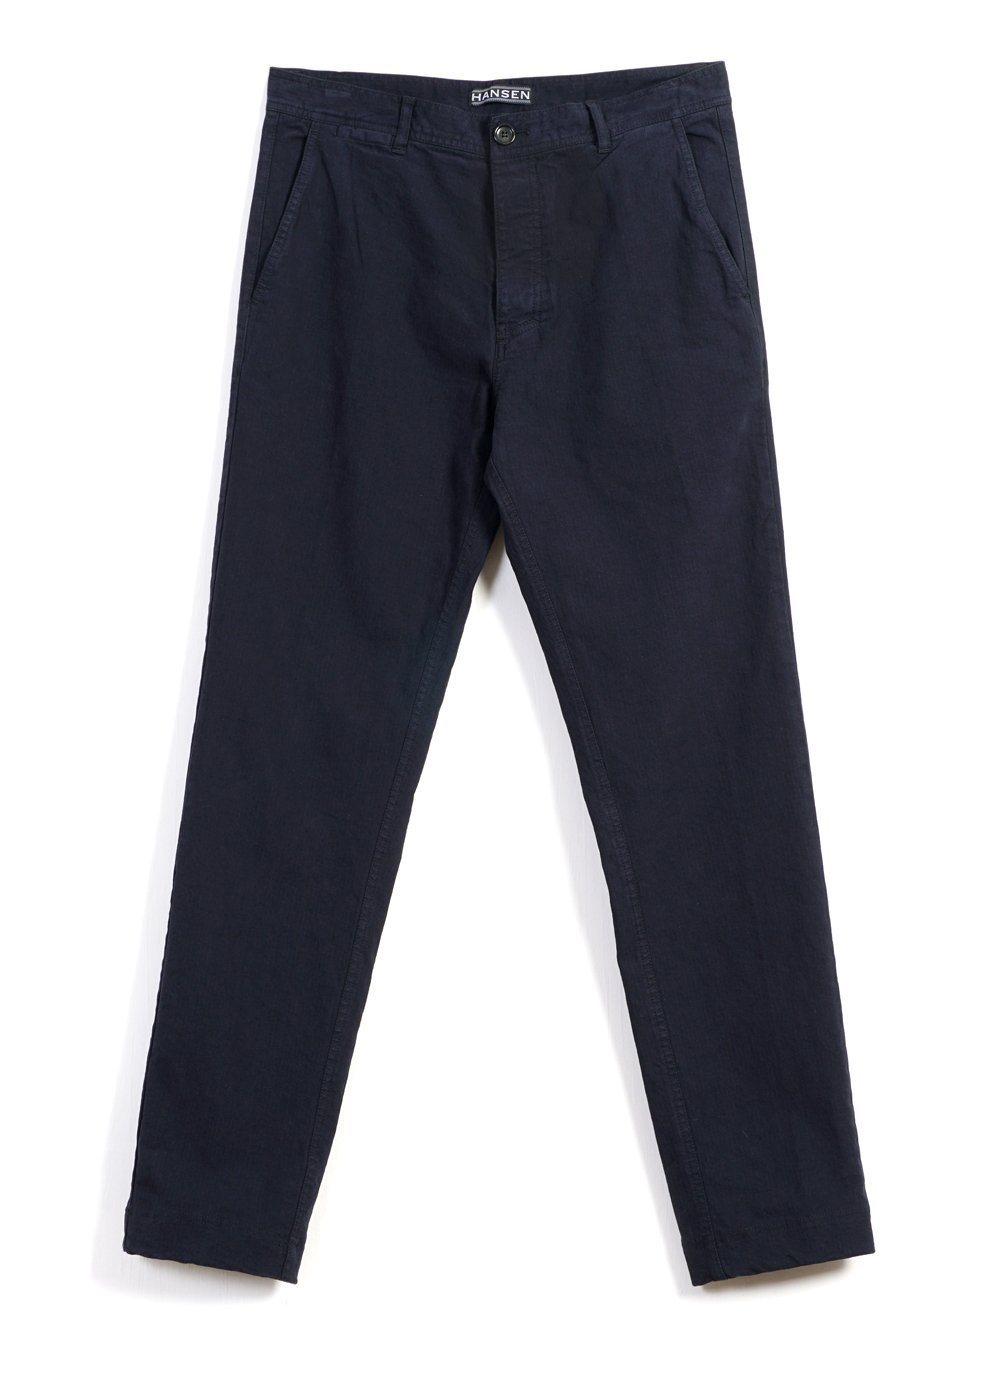 FRED | Regular Fit Trousers | Northsea -HANSEN Garments- HANSEN Garments